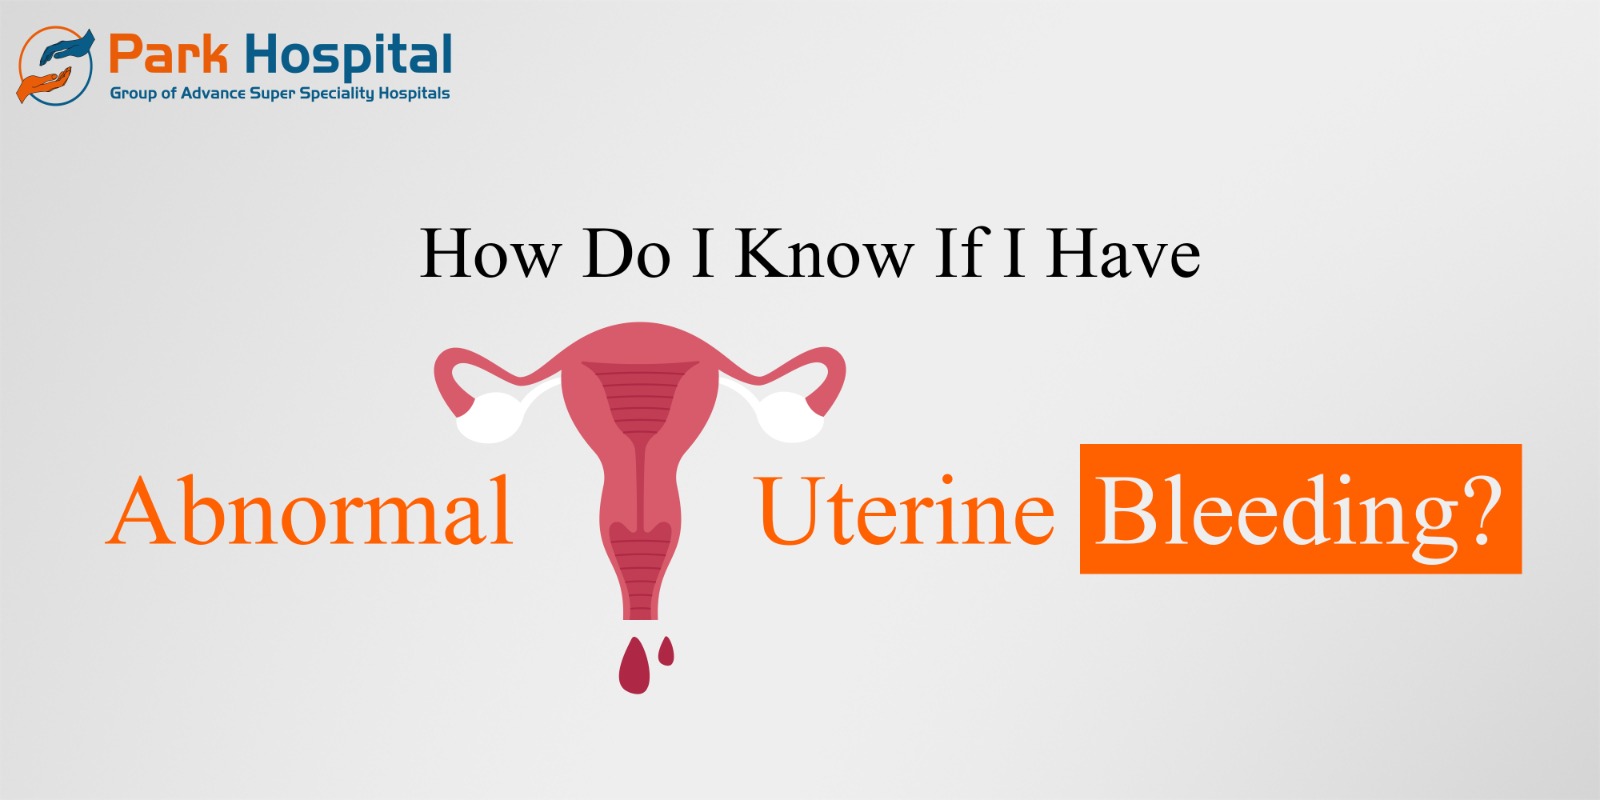 How Do I Know If I Have Abnormal Uterine Bleeding